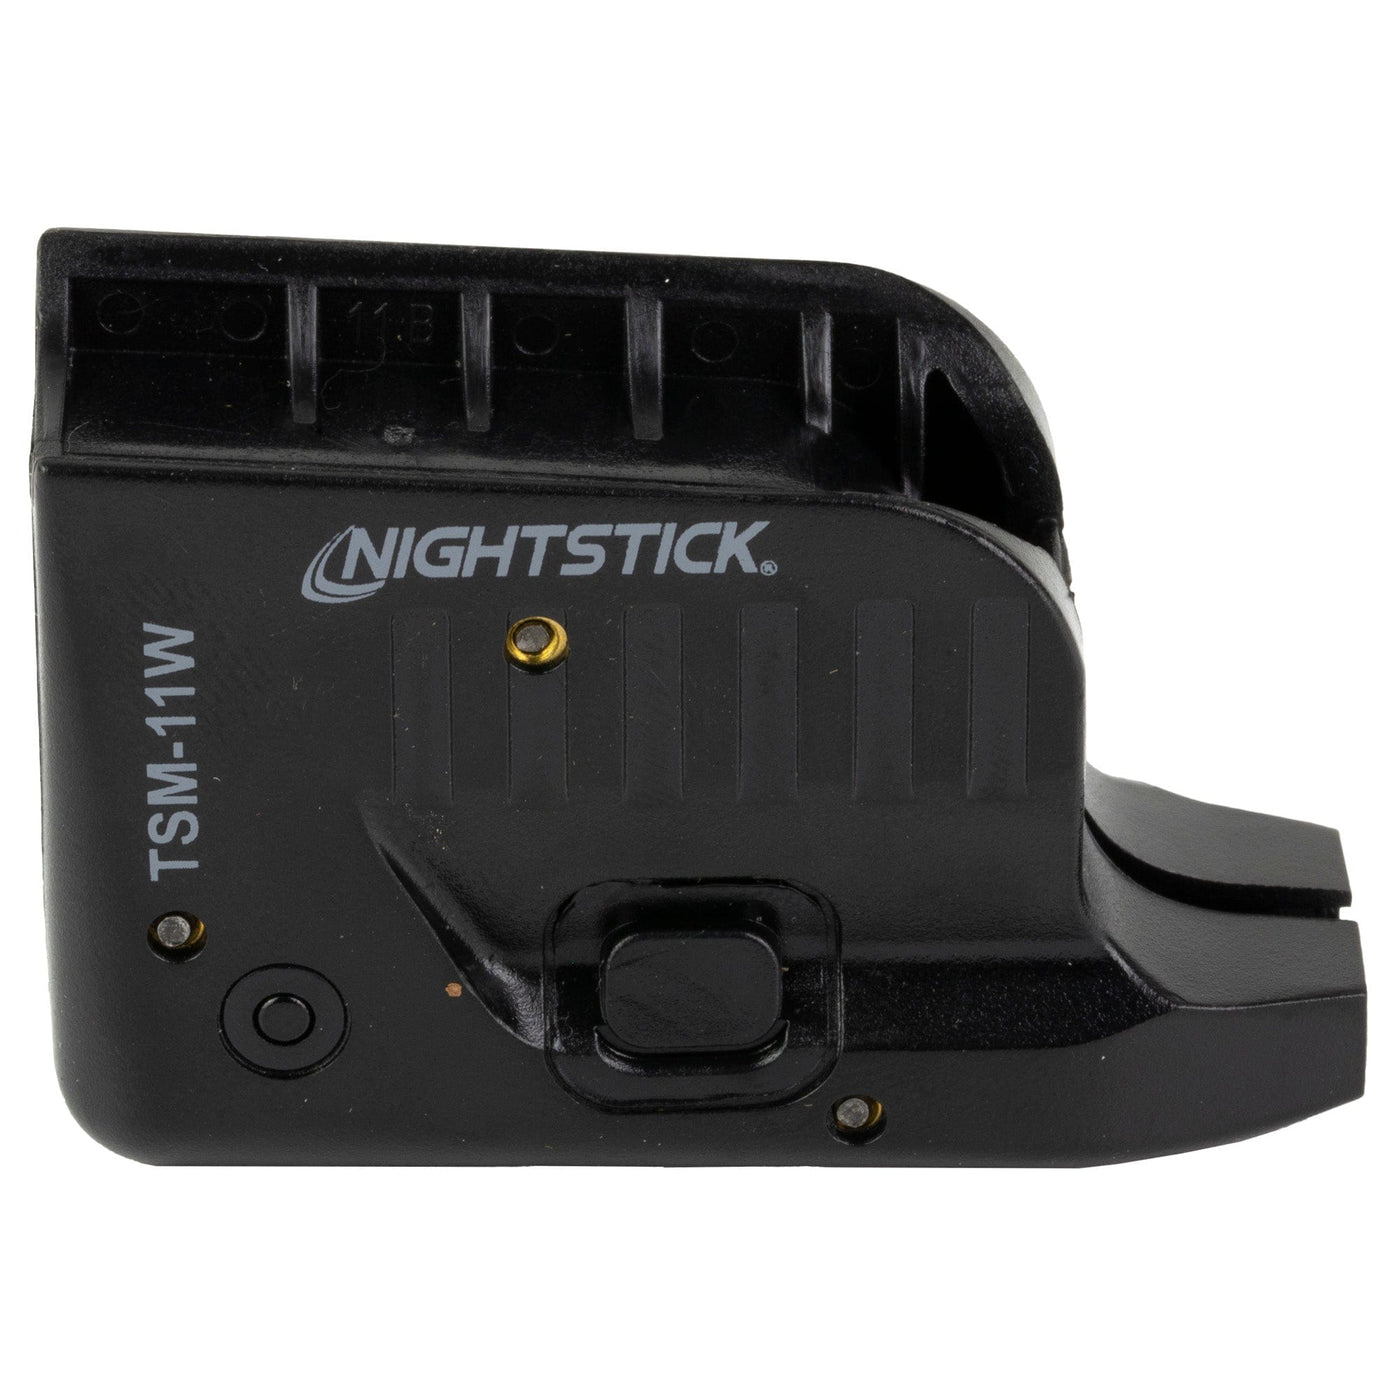 Nightstick Nightstick Sub-compact Handgun Light Black 150 Lumens Fits Glock G42/43/43x/48 Flashlights & Batteries